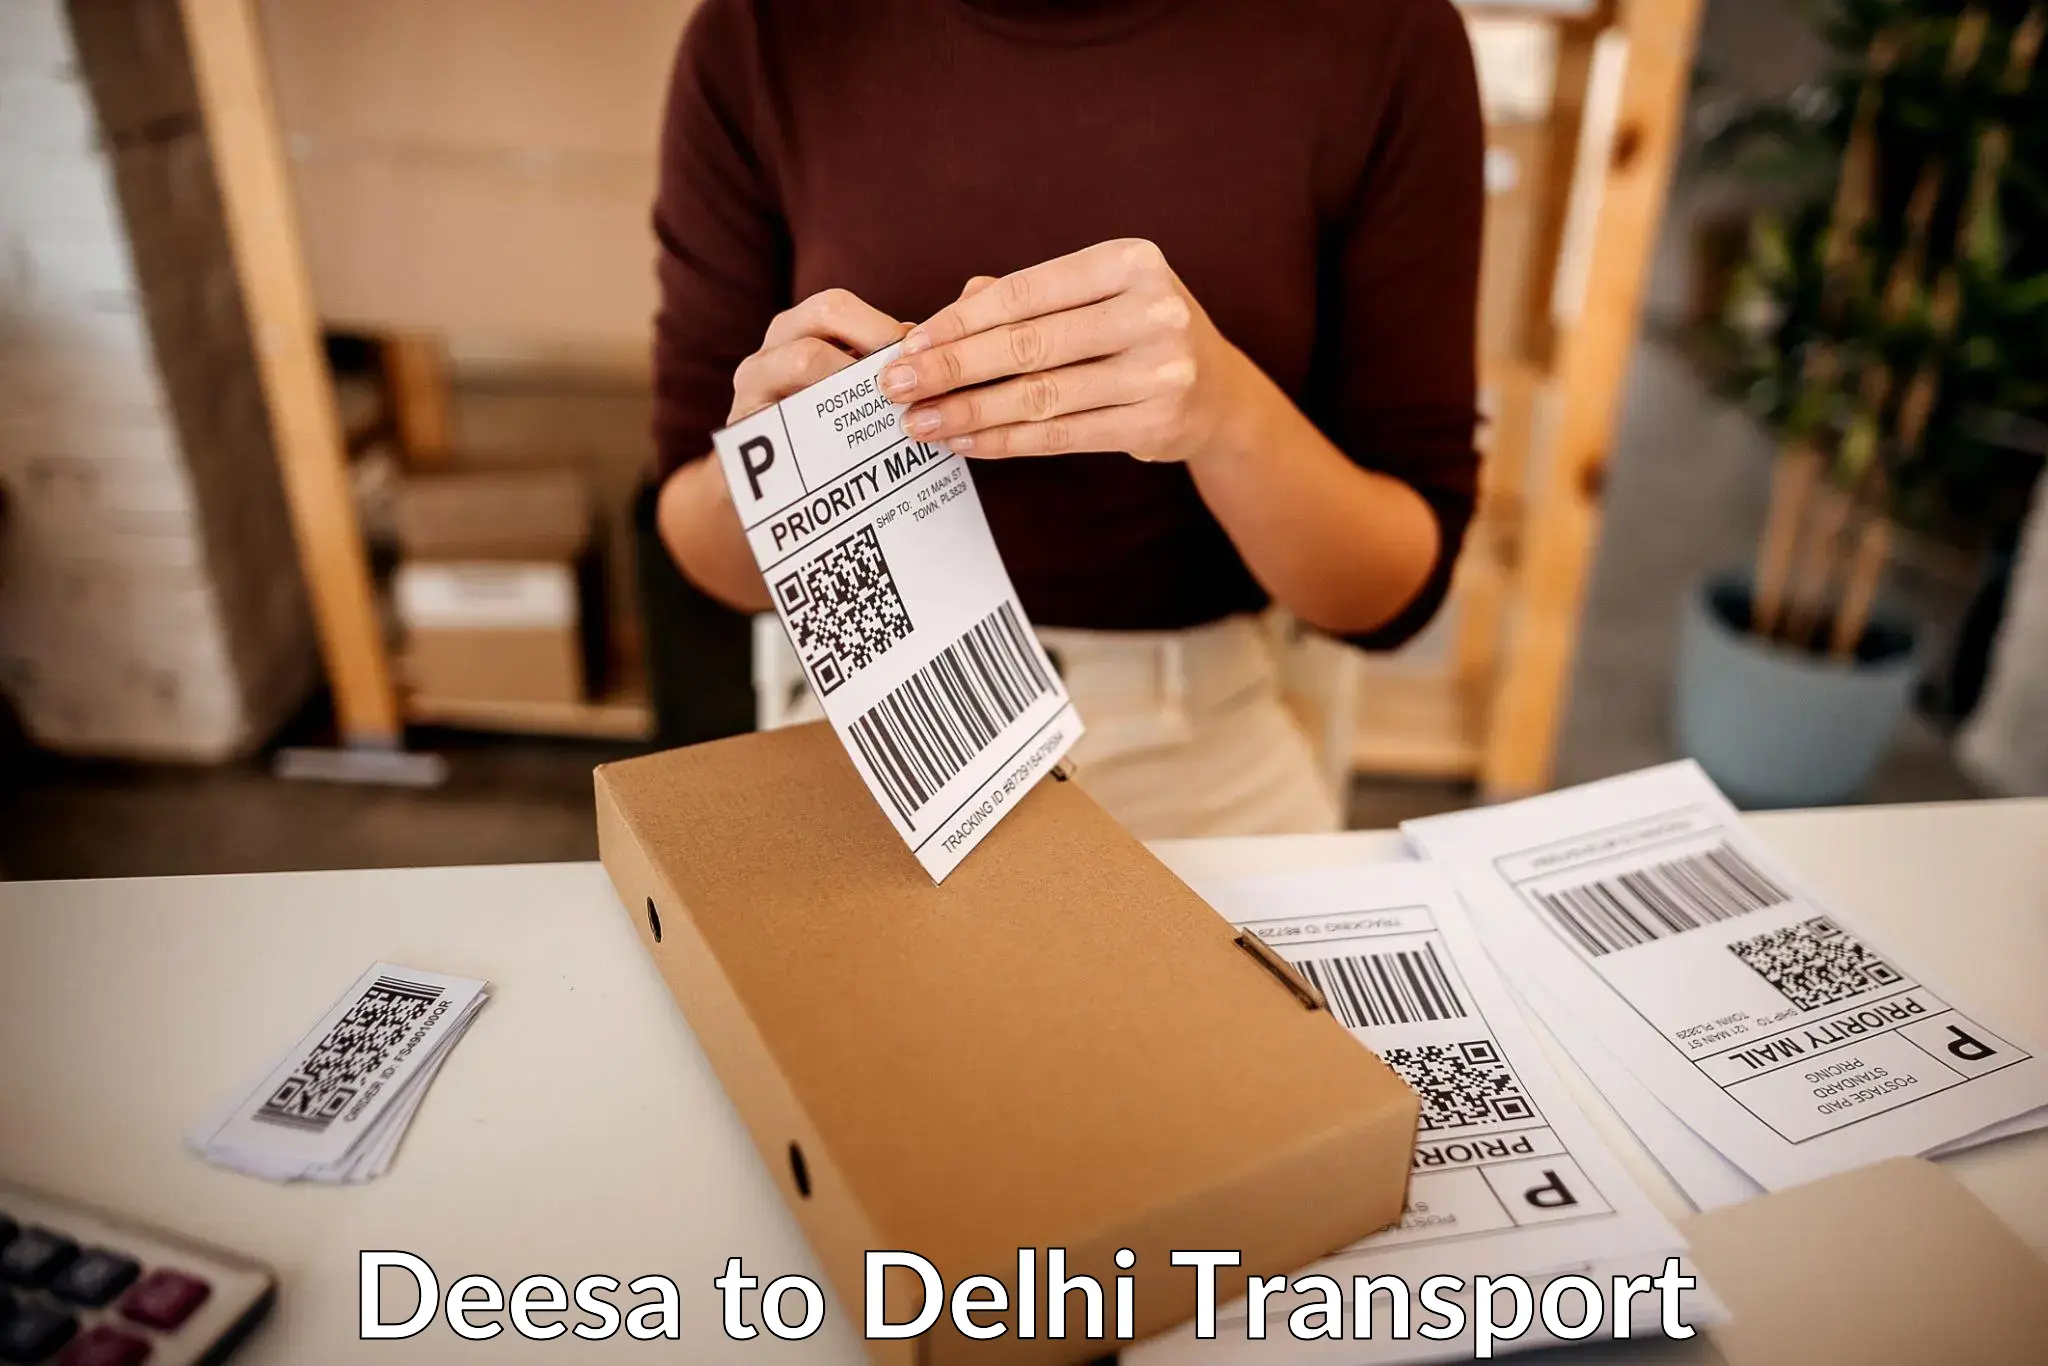 Truck transport companies in India Deesa to Delhi